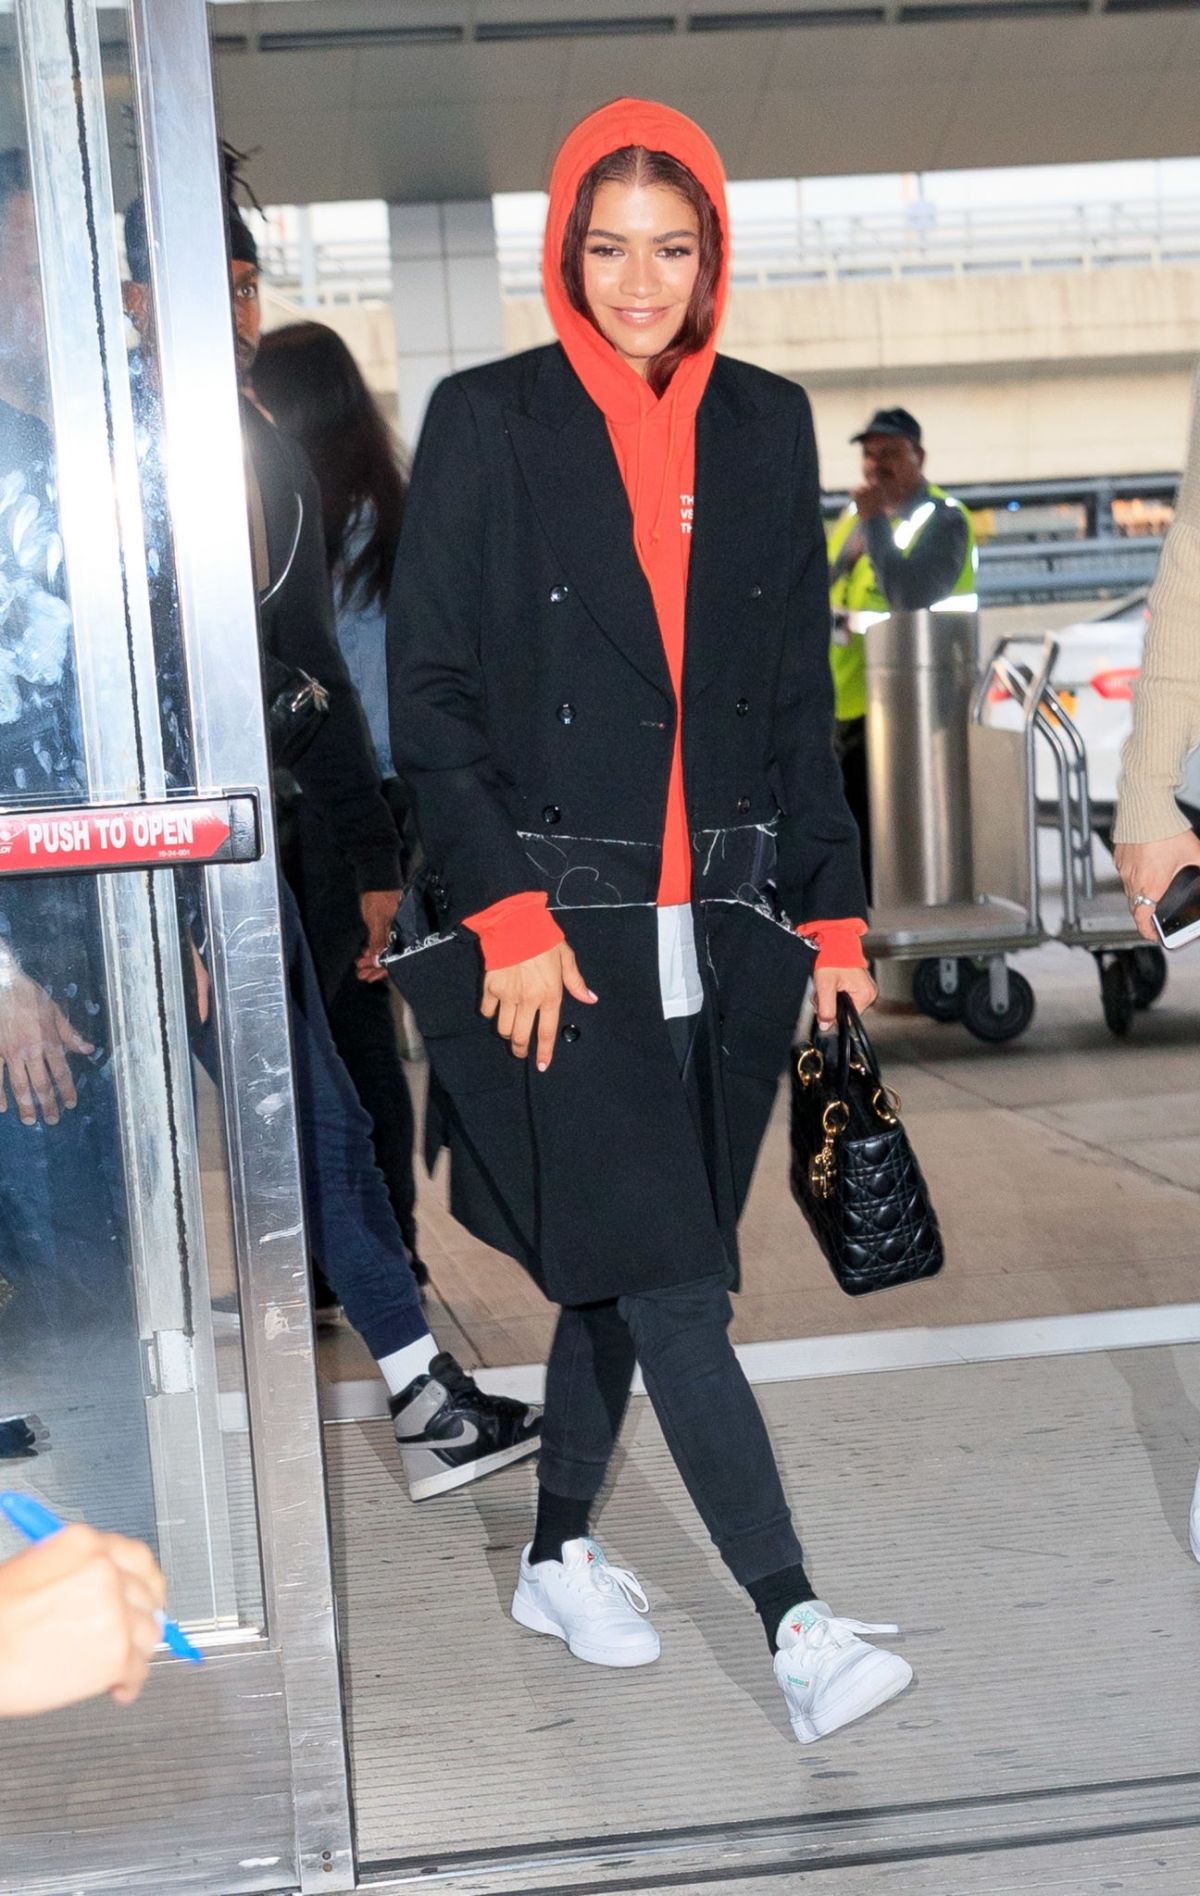 Zendaya Coleman Heathrow Airport February 19, 2018 – Star Style